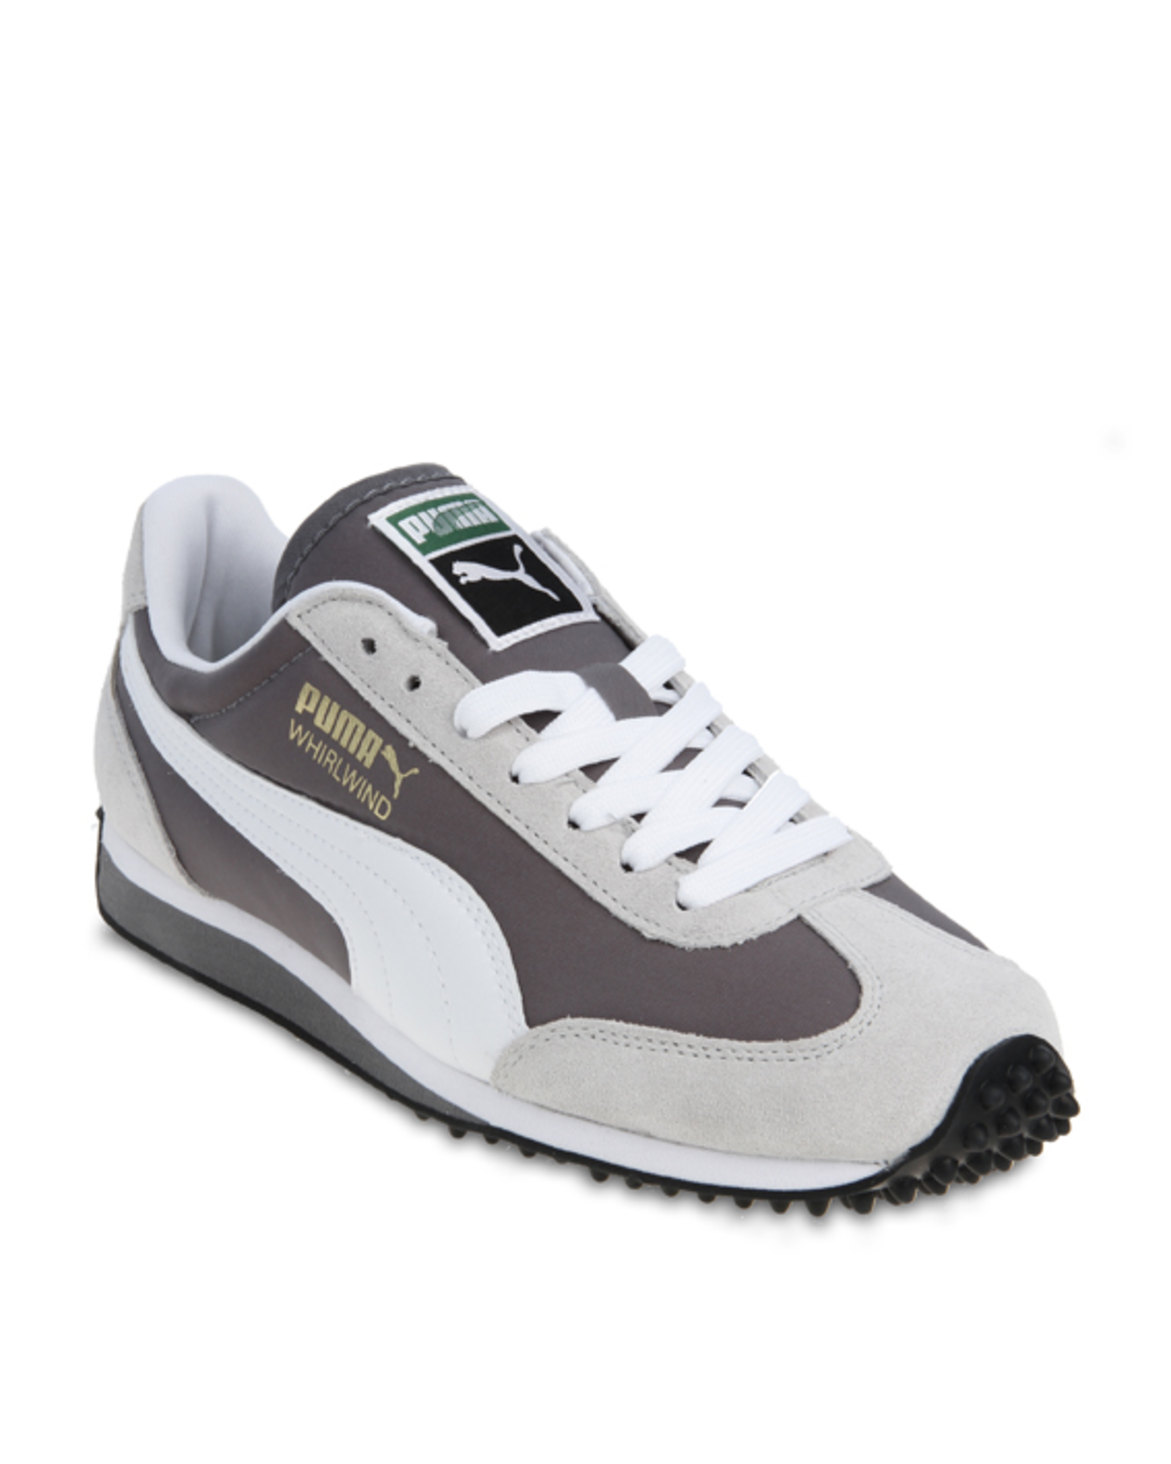 Puma Whirlwind Classic Sneakers Grey | Zando